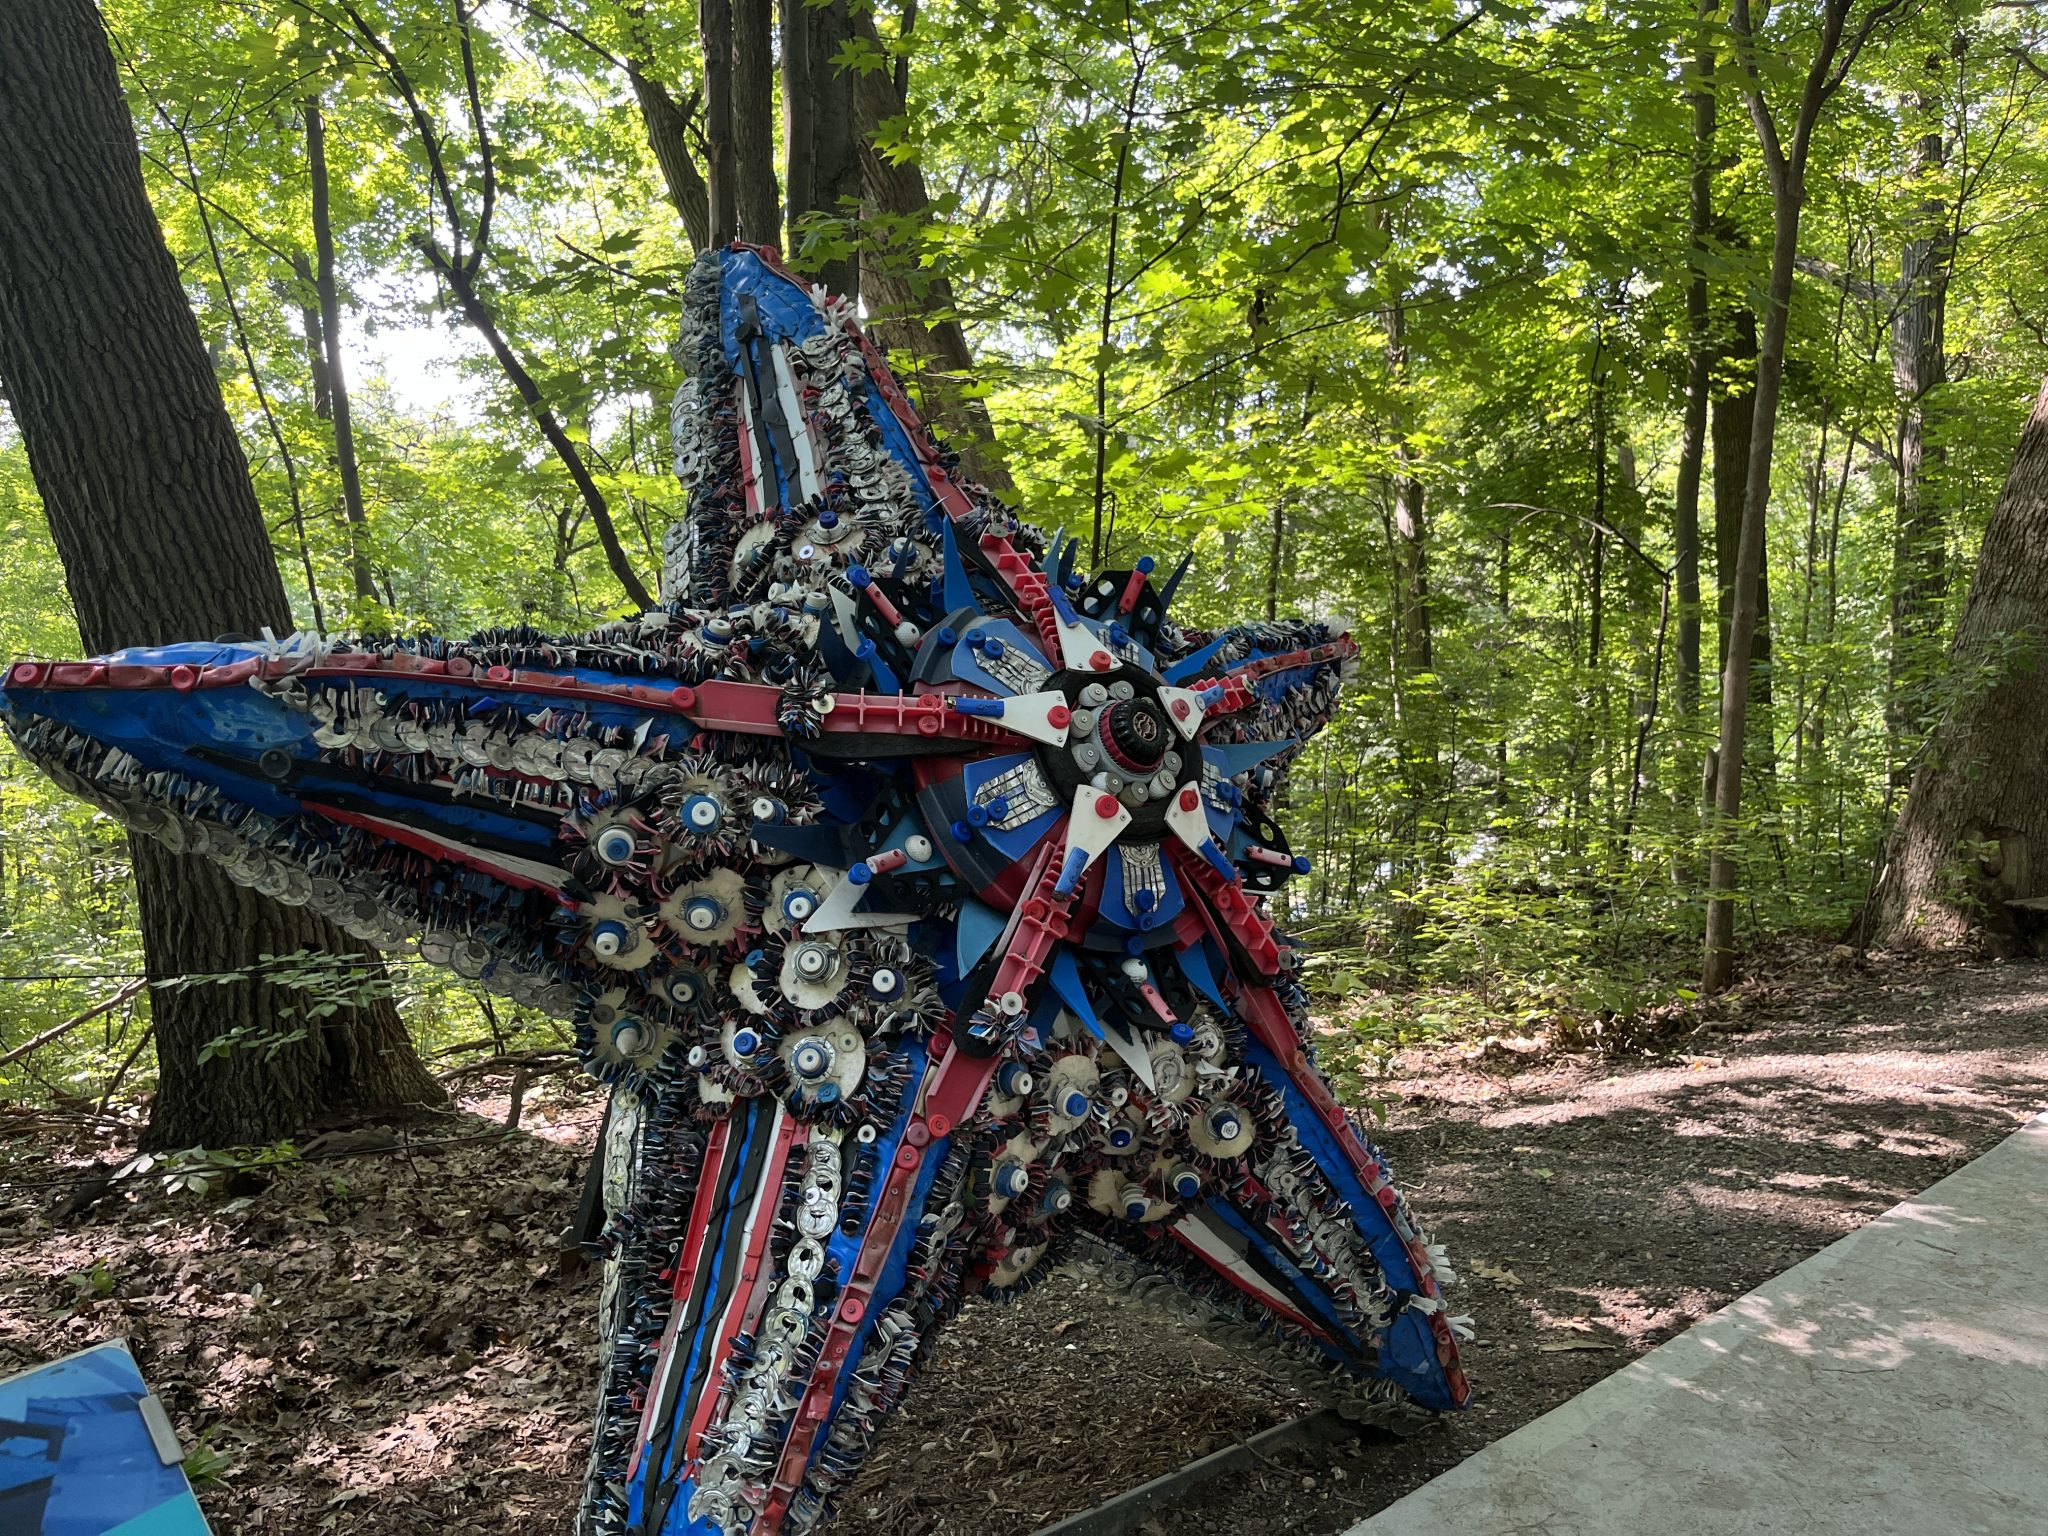 Starfish sculpture made of trash